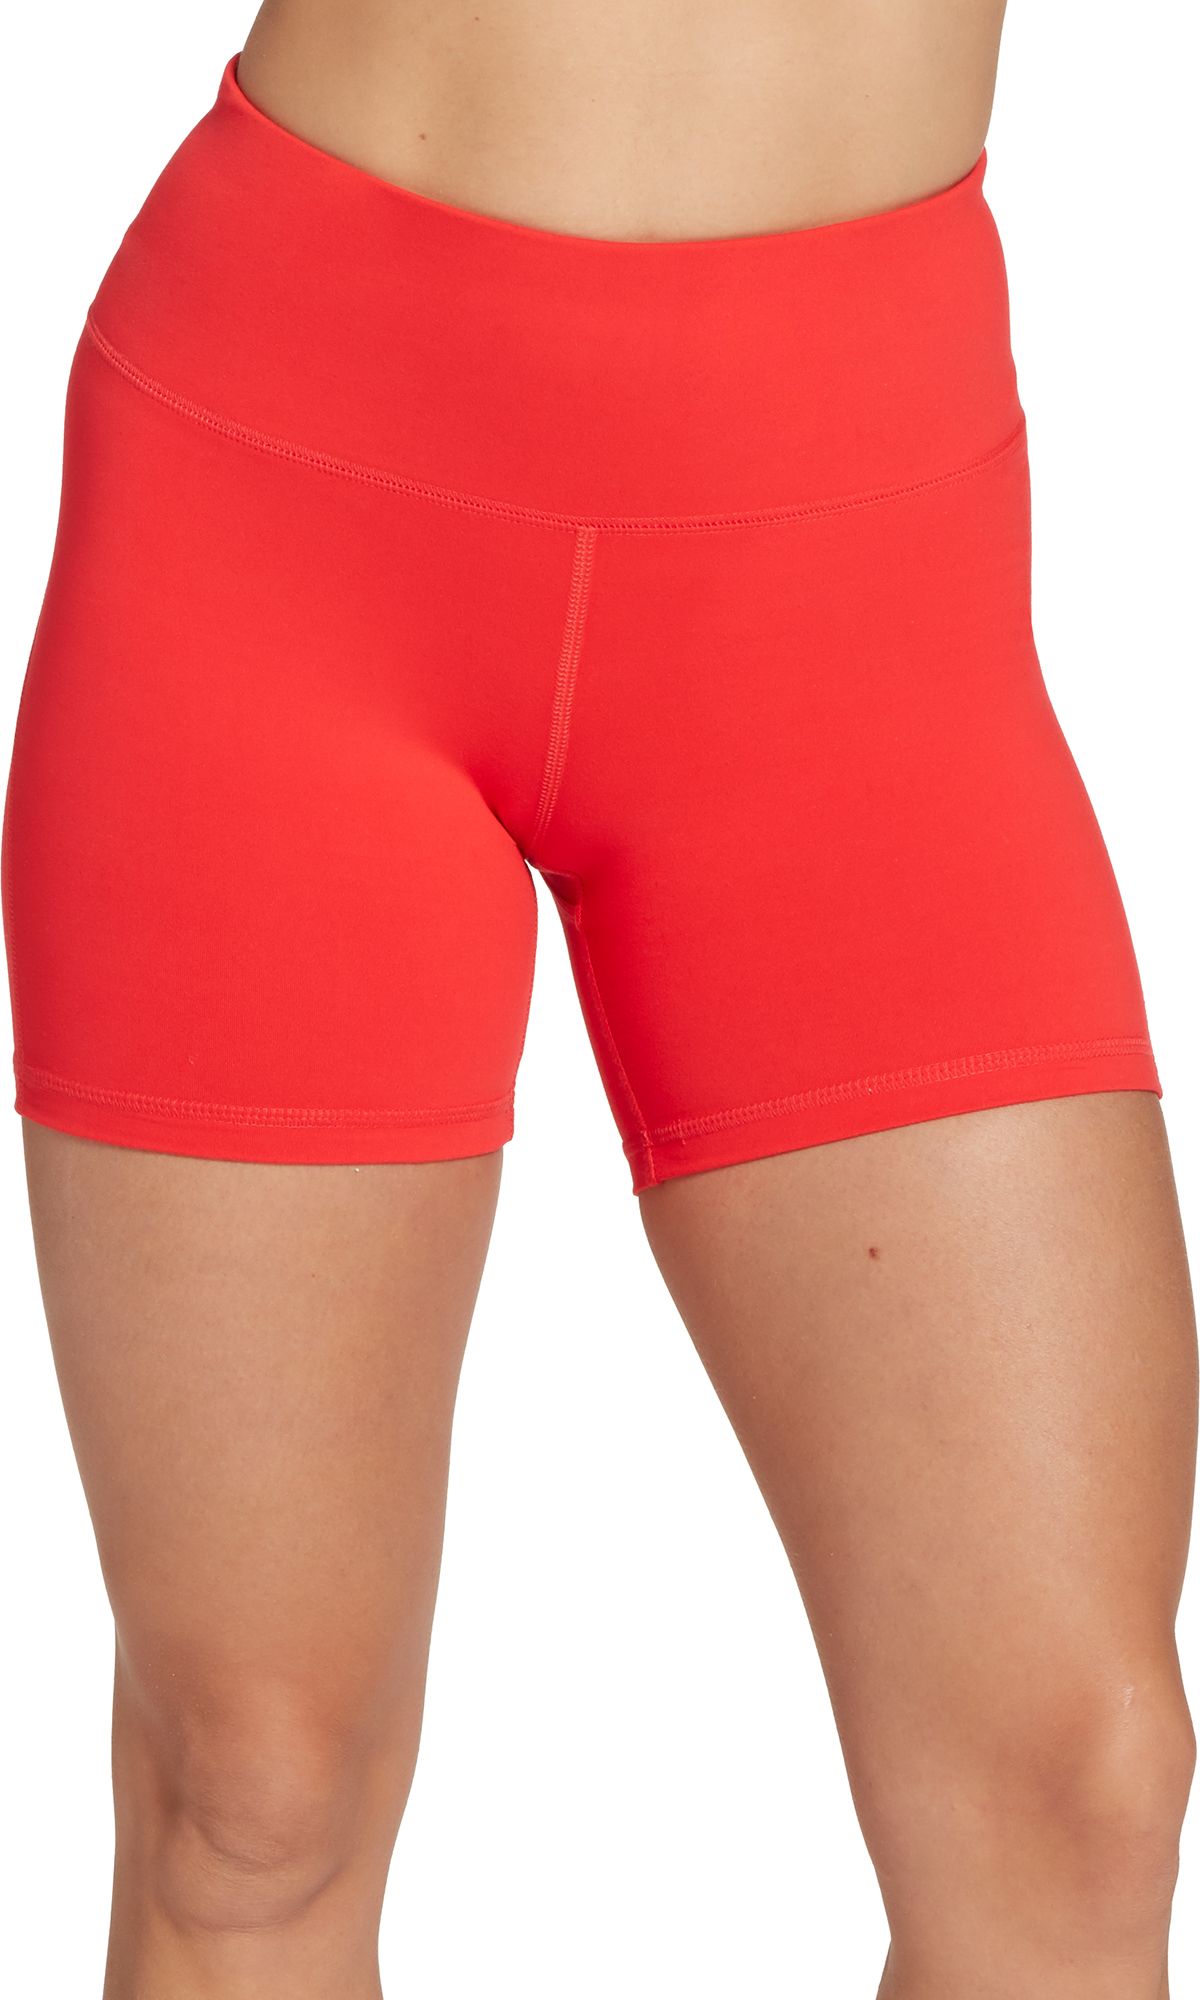 red biking shorts